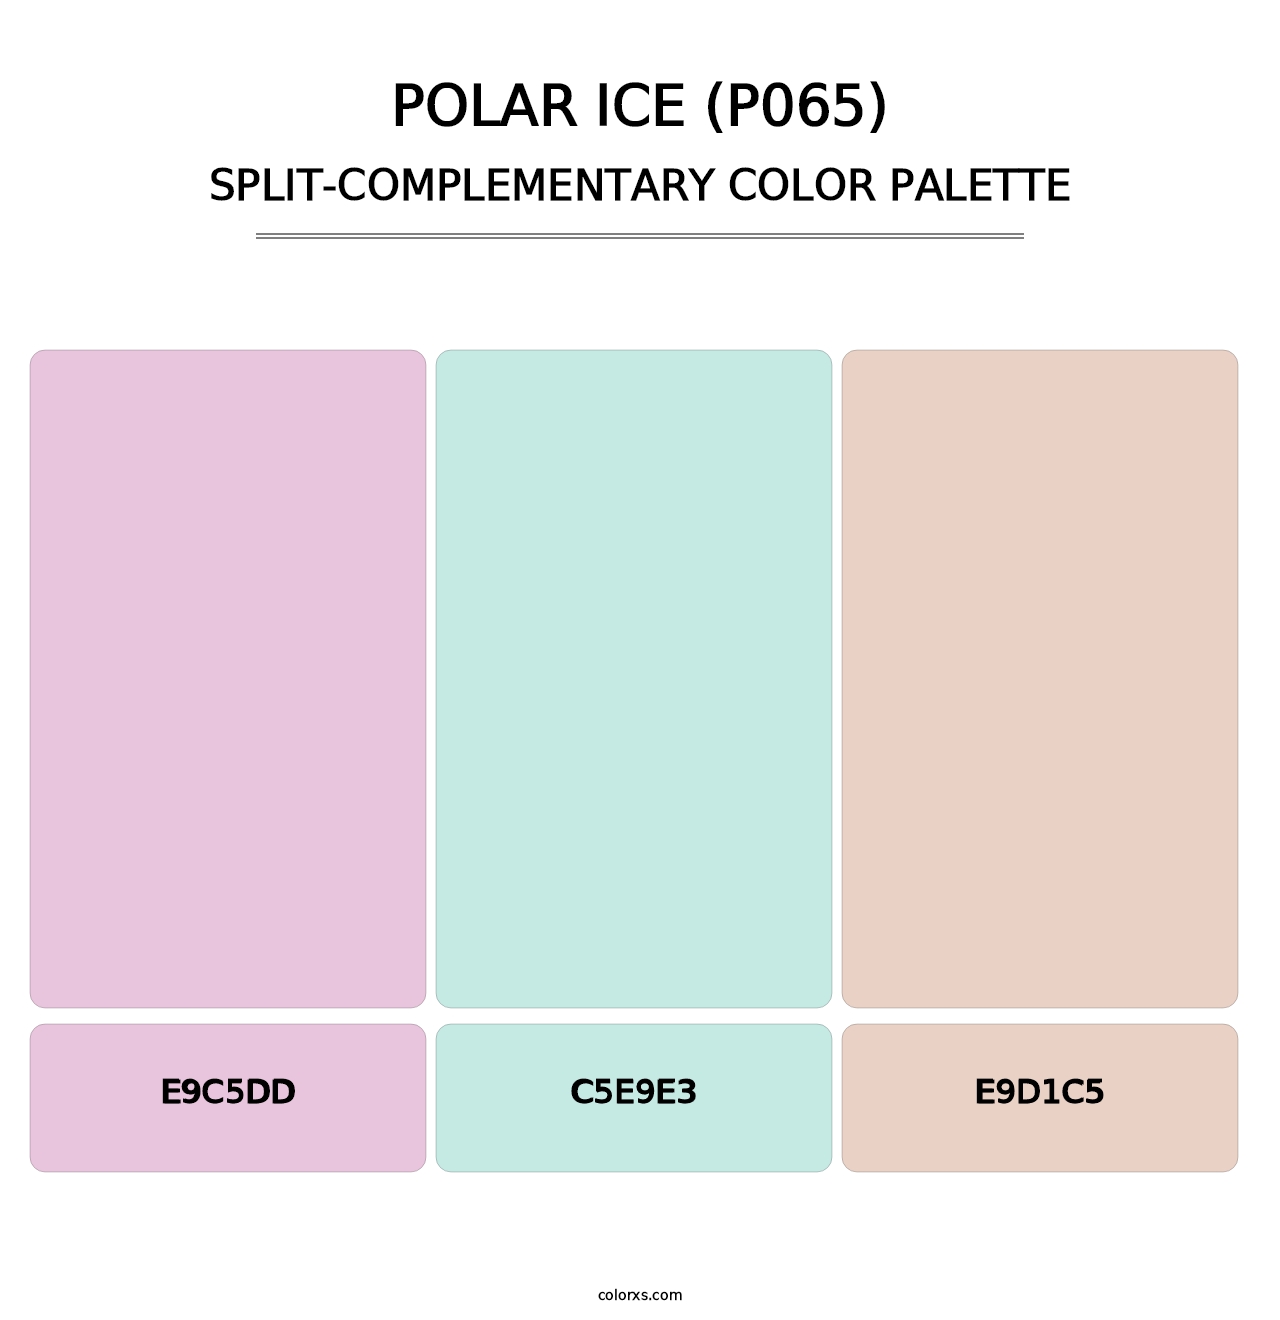 Polar Ice (P065) - Split-Complementary Color Palette